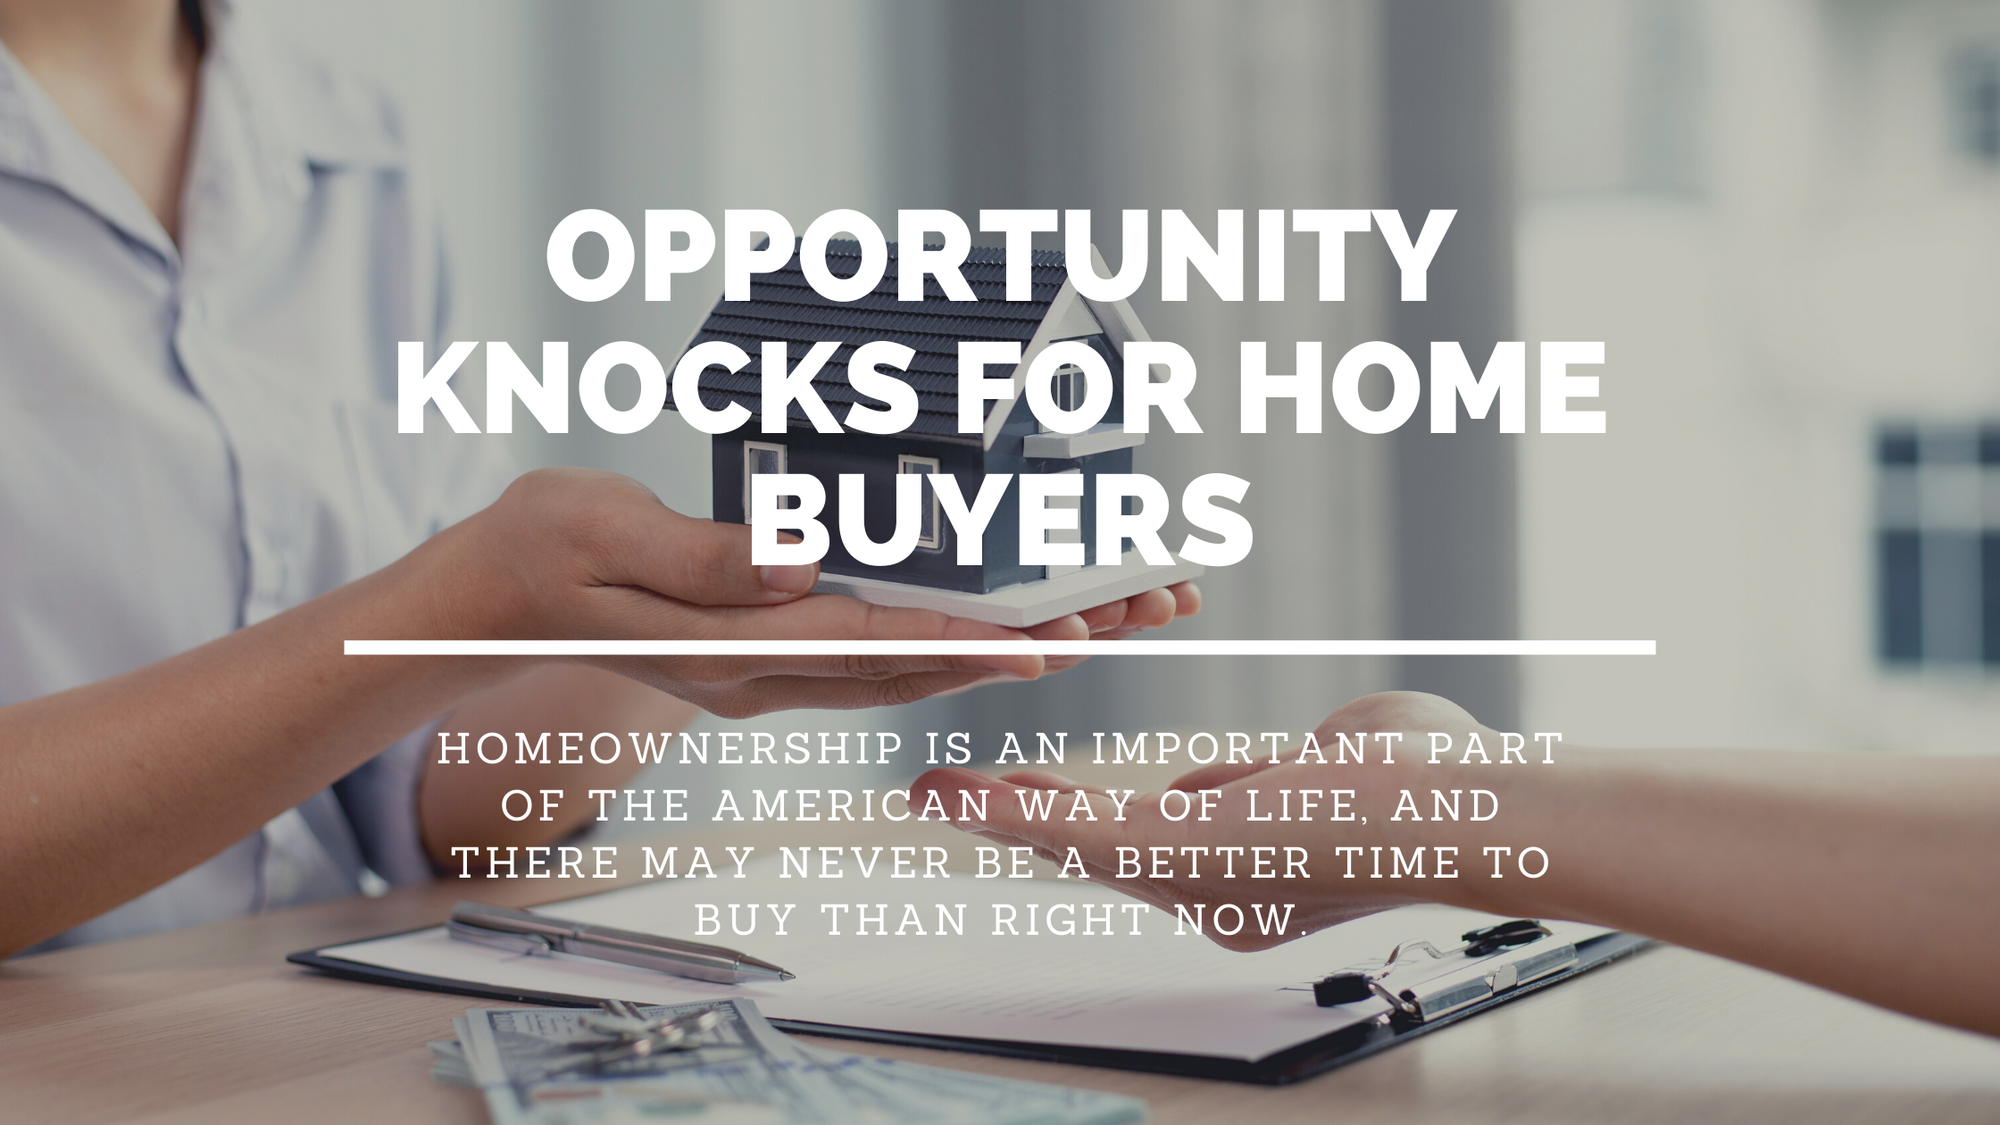 Homeownership Benefits Extend Beyond Property Boundaries